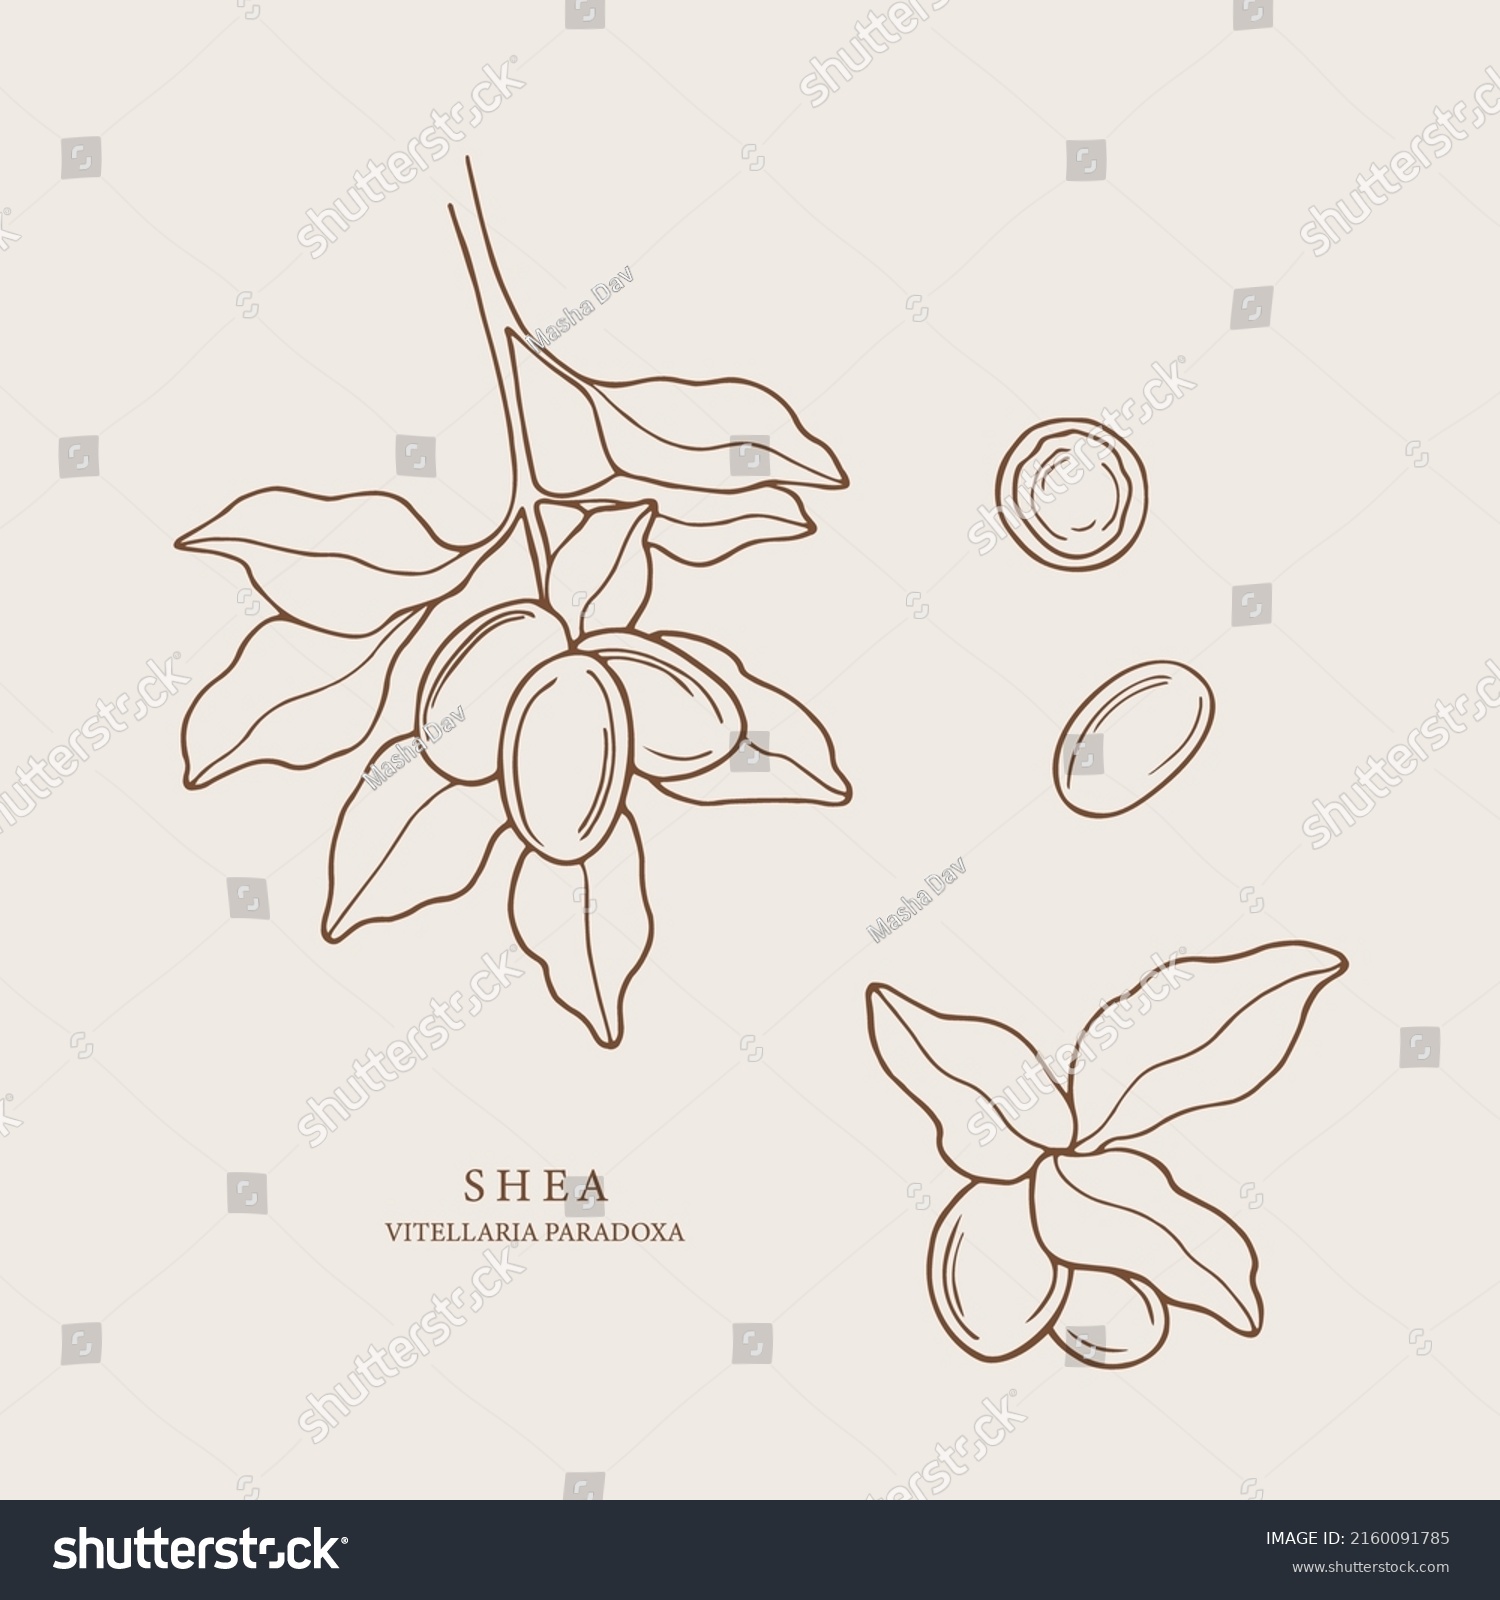 SVG of Hand drawn shea collection. Botanical design for organic cosmetics, medicine svg